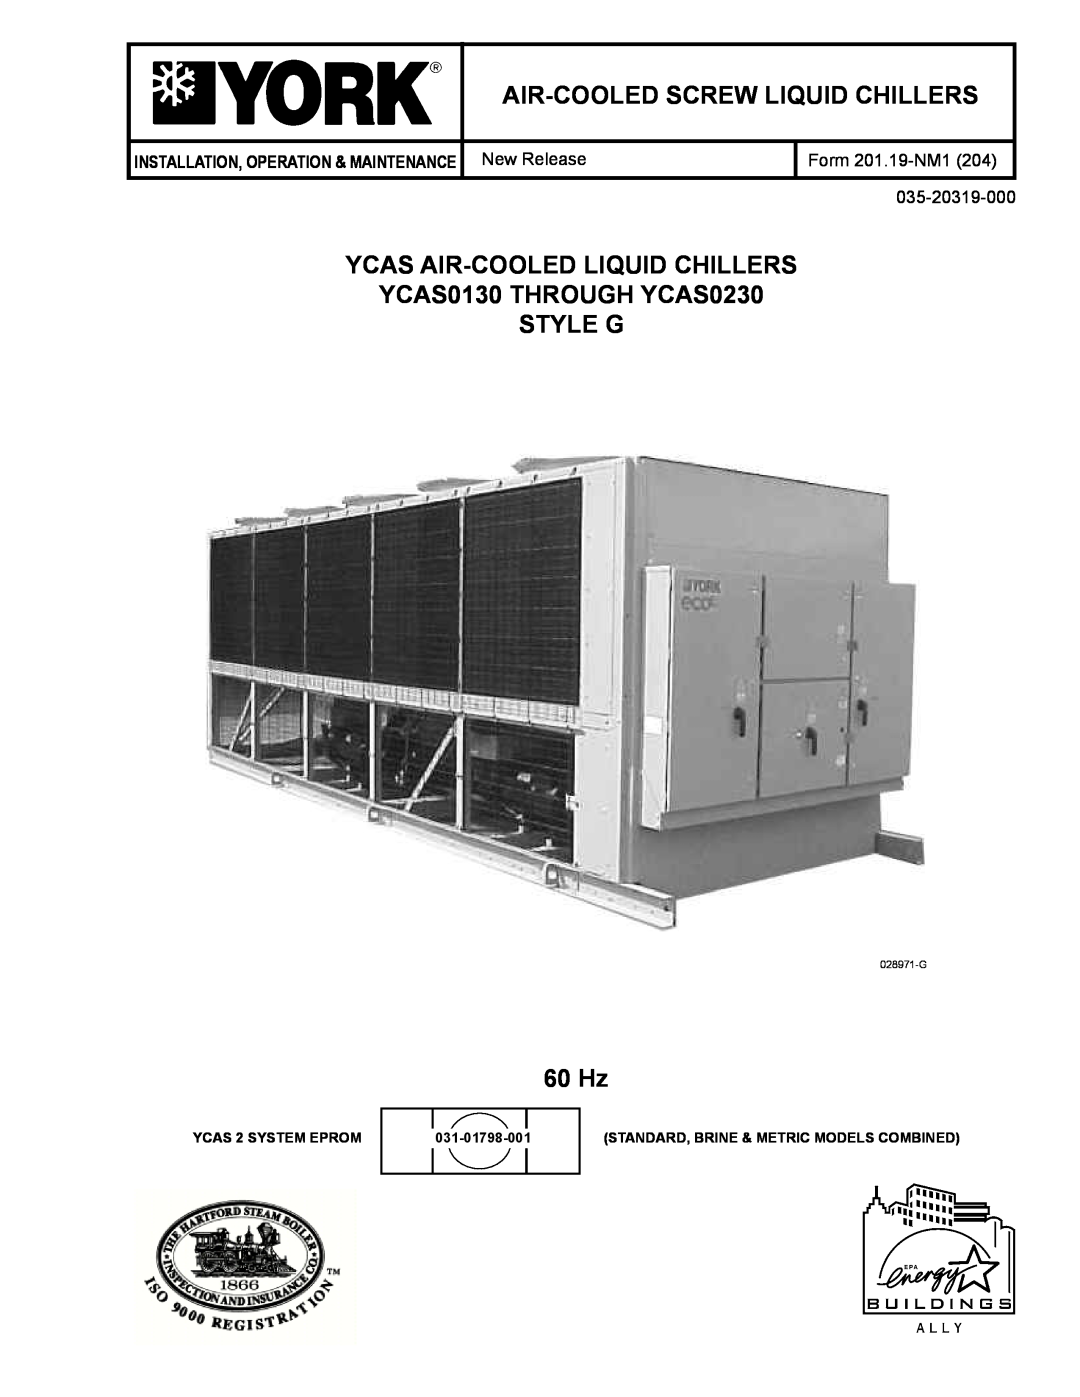 York manual Air-Cooled Screw Liquid Chillers, YCAS AIR-COOLED LIQUID CHILLERS YCAS0130 THROUGH YCAS0230 STYLE G, 60 Hz 